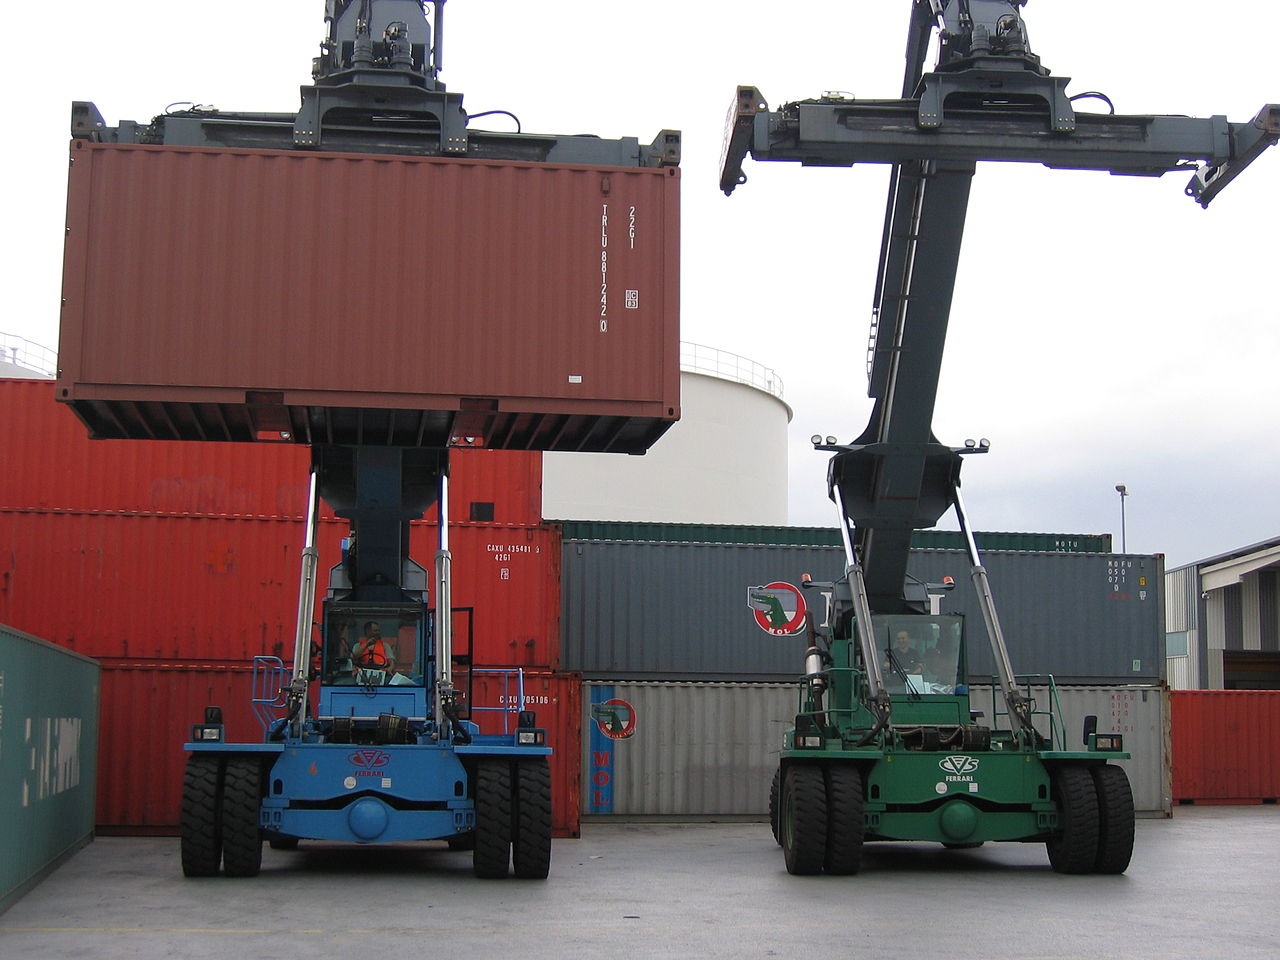 Vehicle - Intermodal - Truck - Container ReachStacker